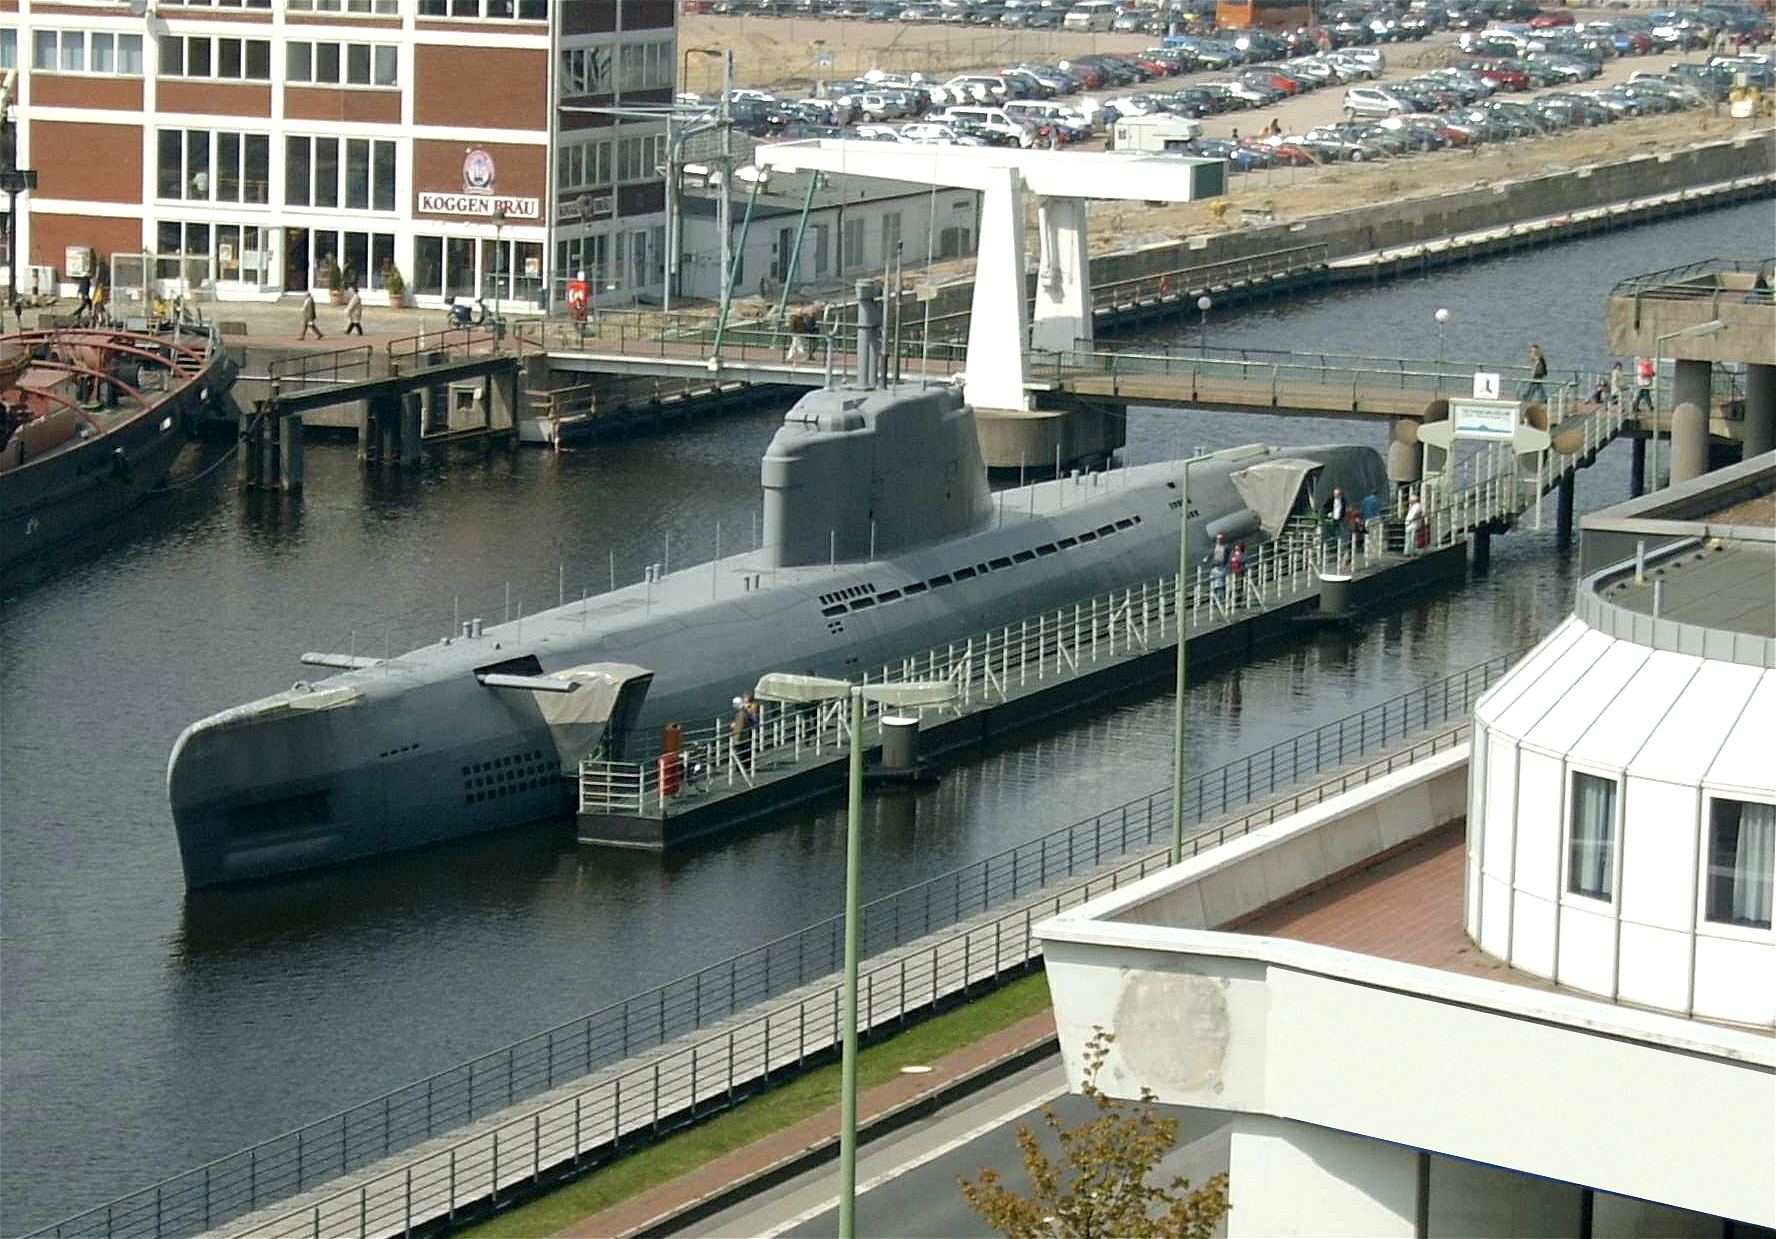 Подводные лодки типа XXI | это... Что такое Подводные лодки типа XXI?